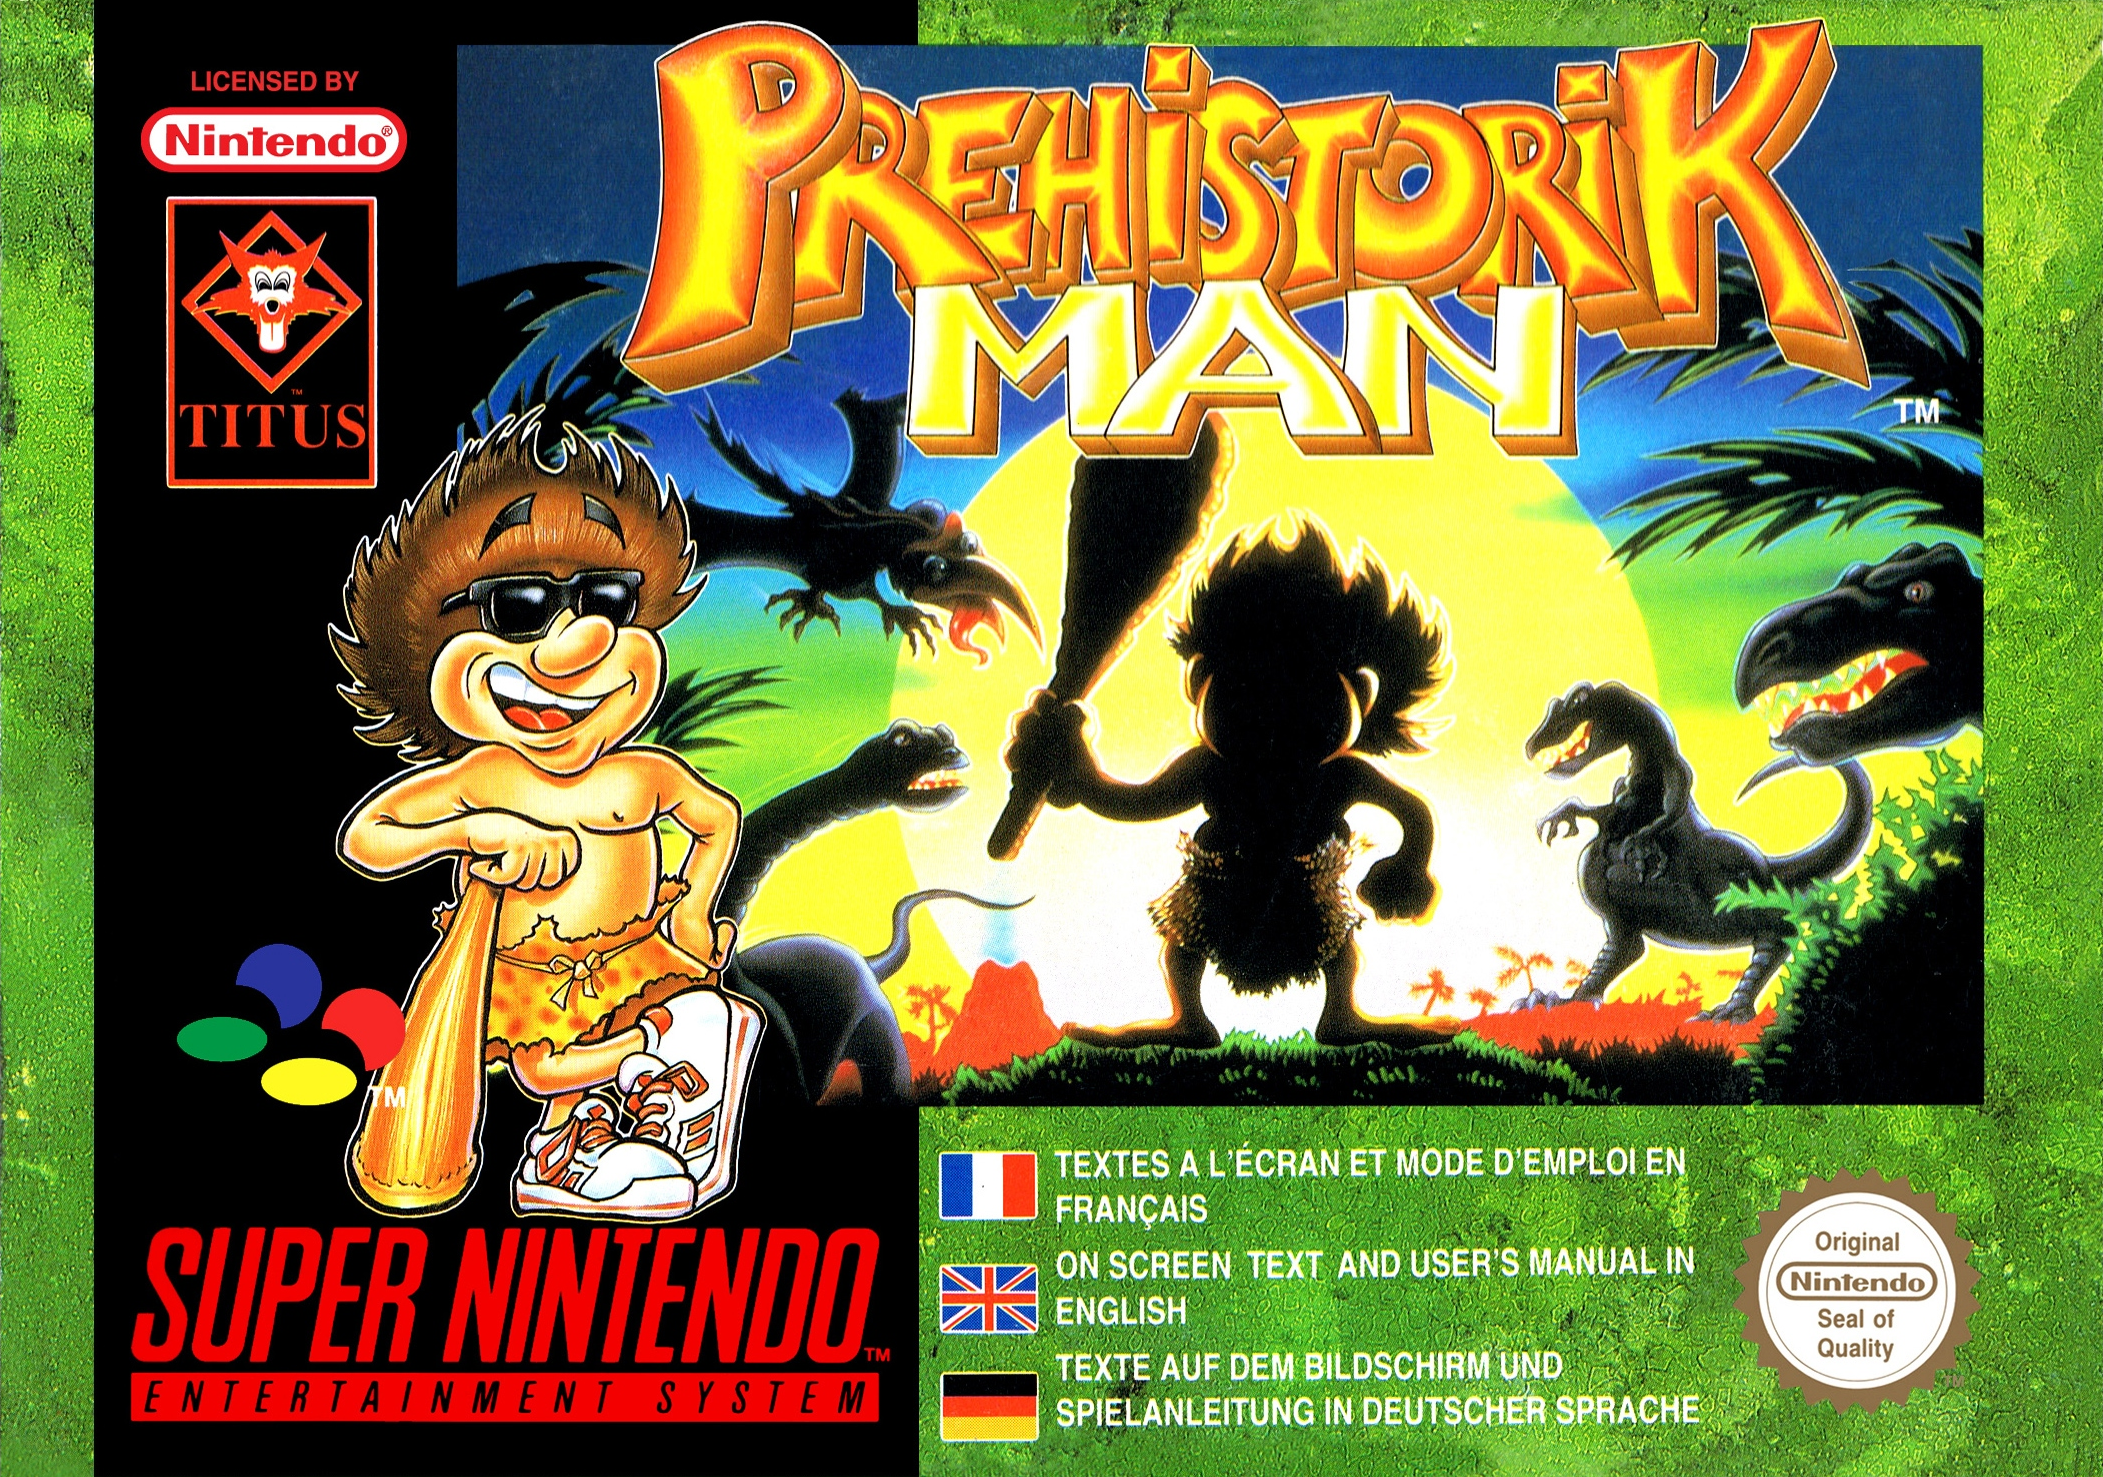 Game | Super Nintendo SNES | Prehistorik Man